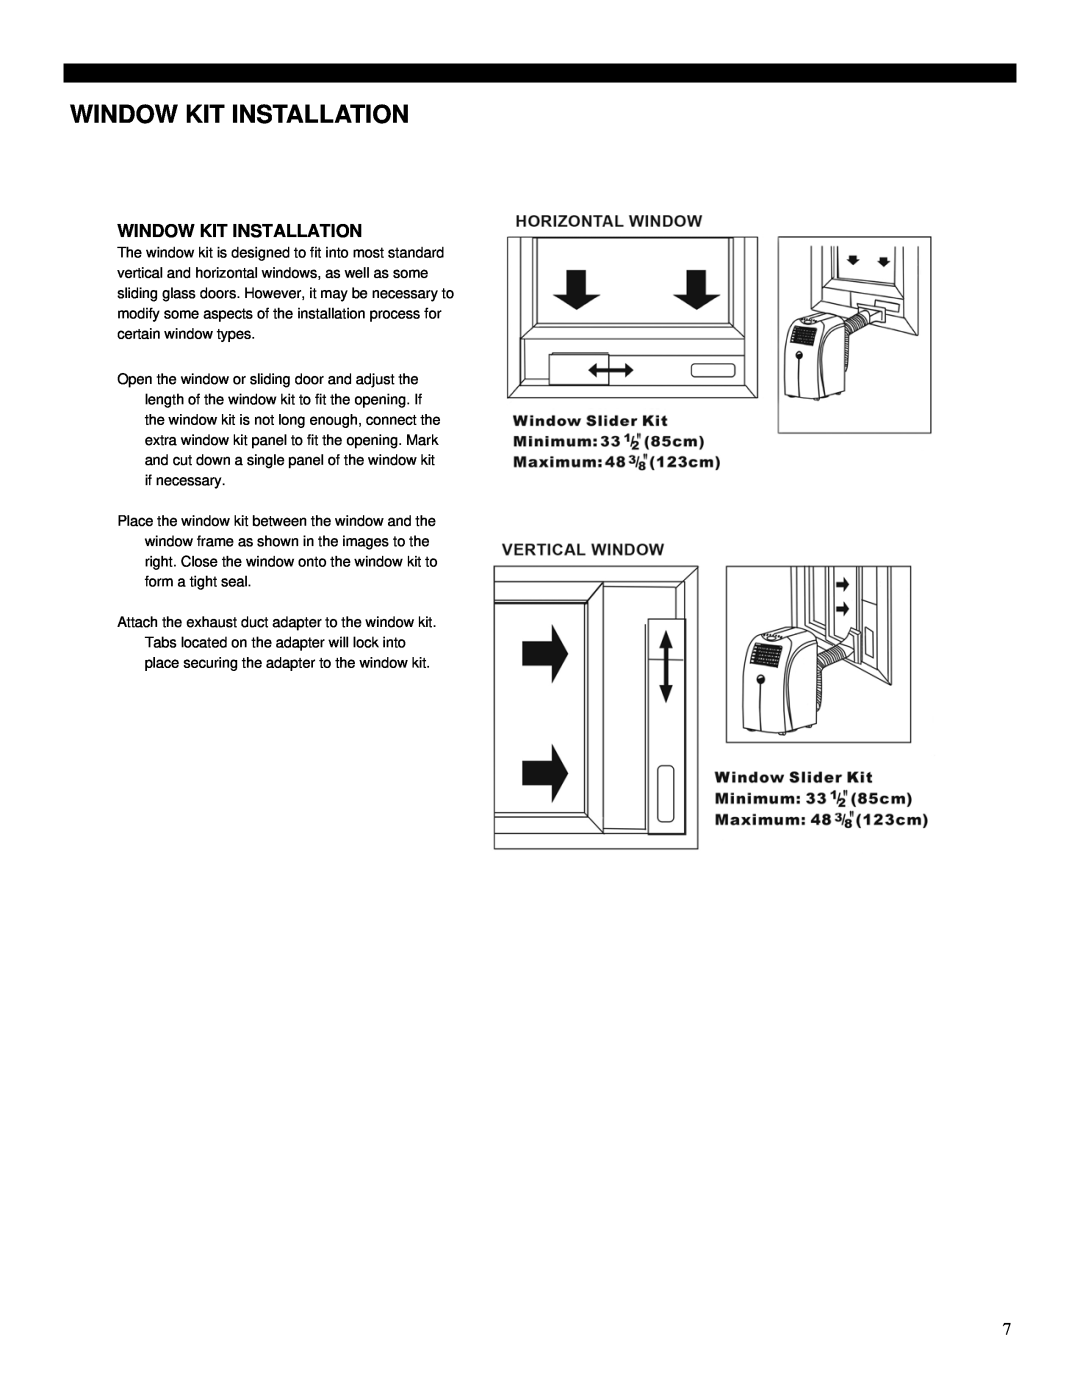 Soleus Air PE2-07R-62 manual Window Kit Installation 